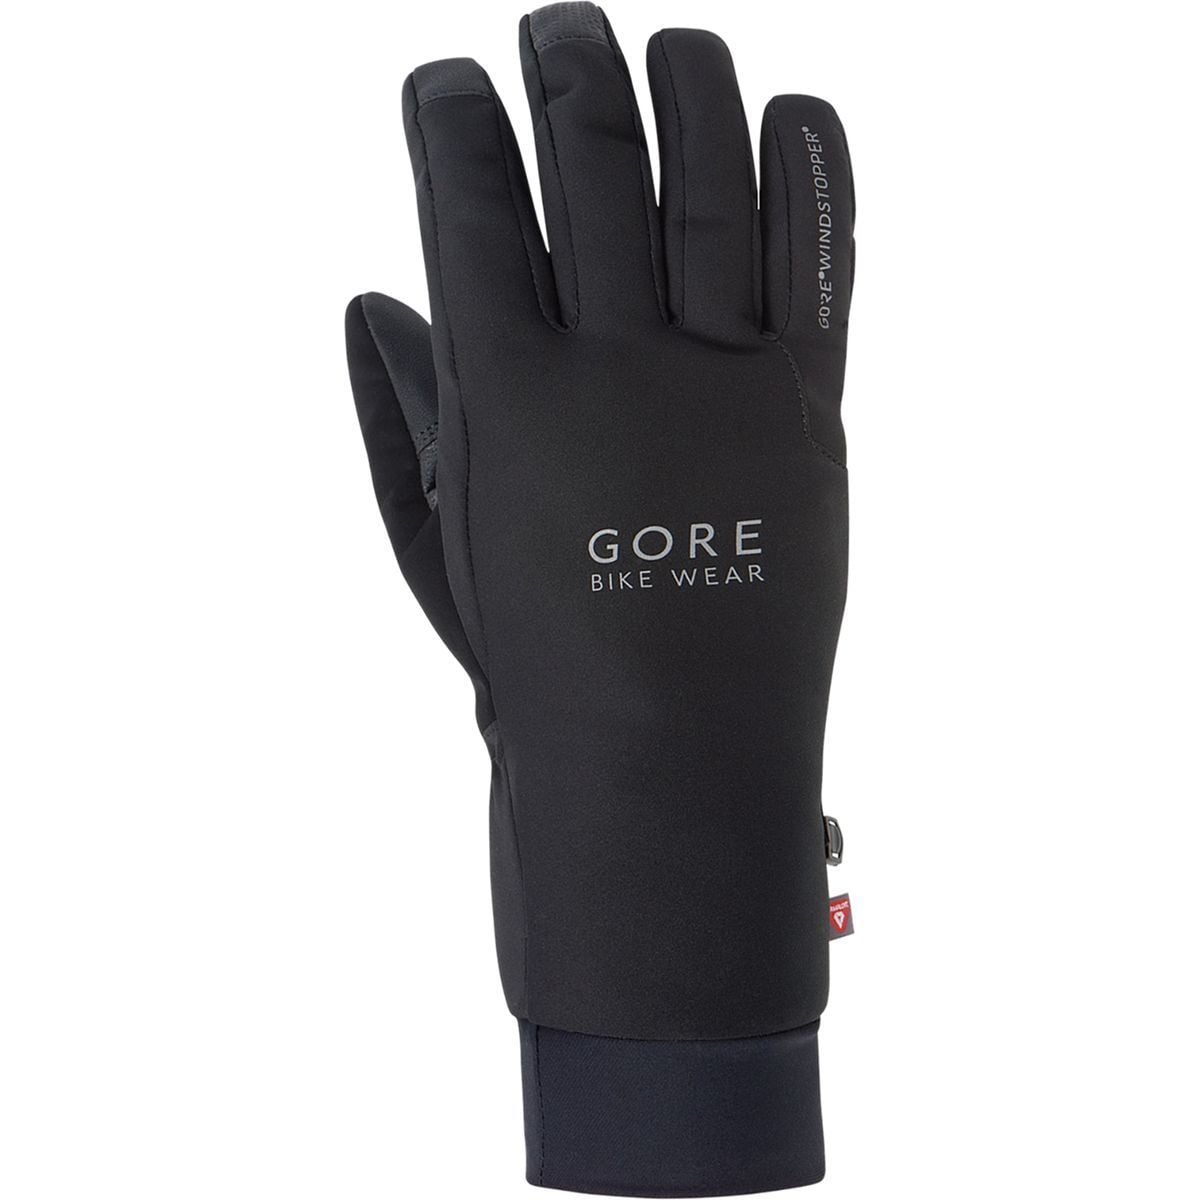 Gore Bike Wear Universal Gore WindStopper Insulated Glove Men's